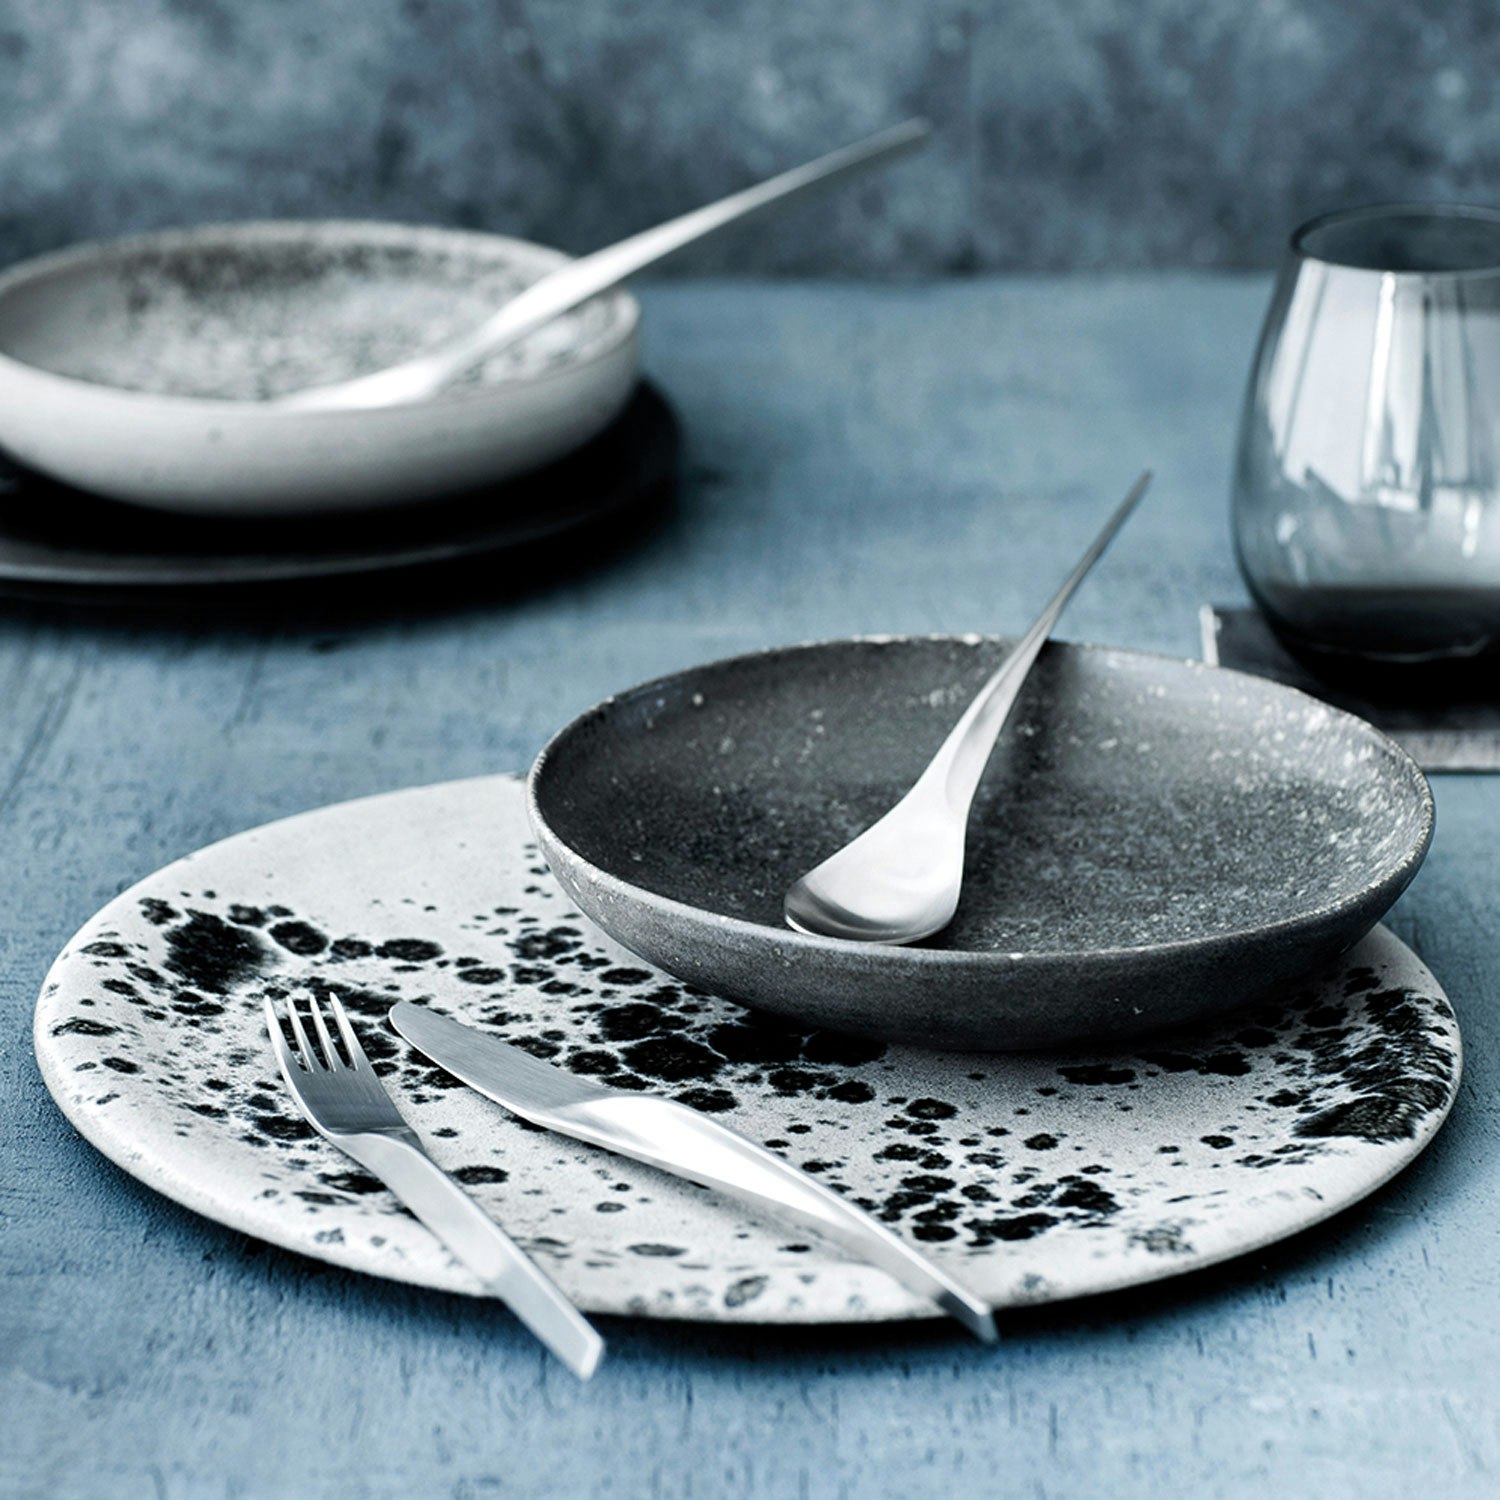 https://royaldesign.com/image/2/gense-holscher-cutlery-set-16-pieces-1